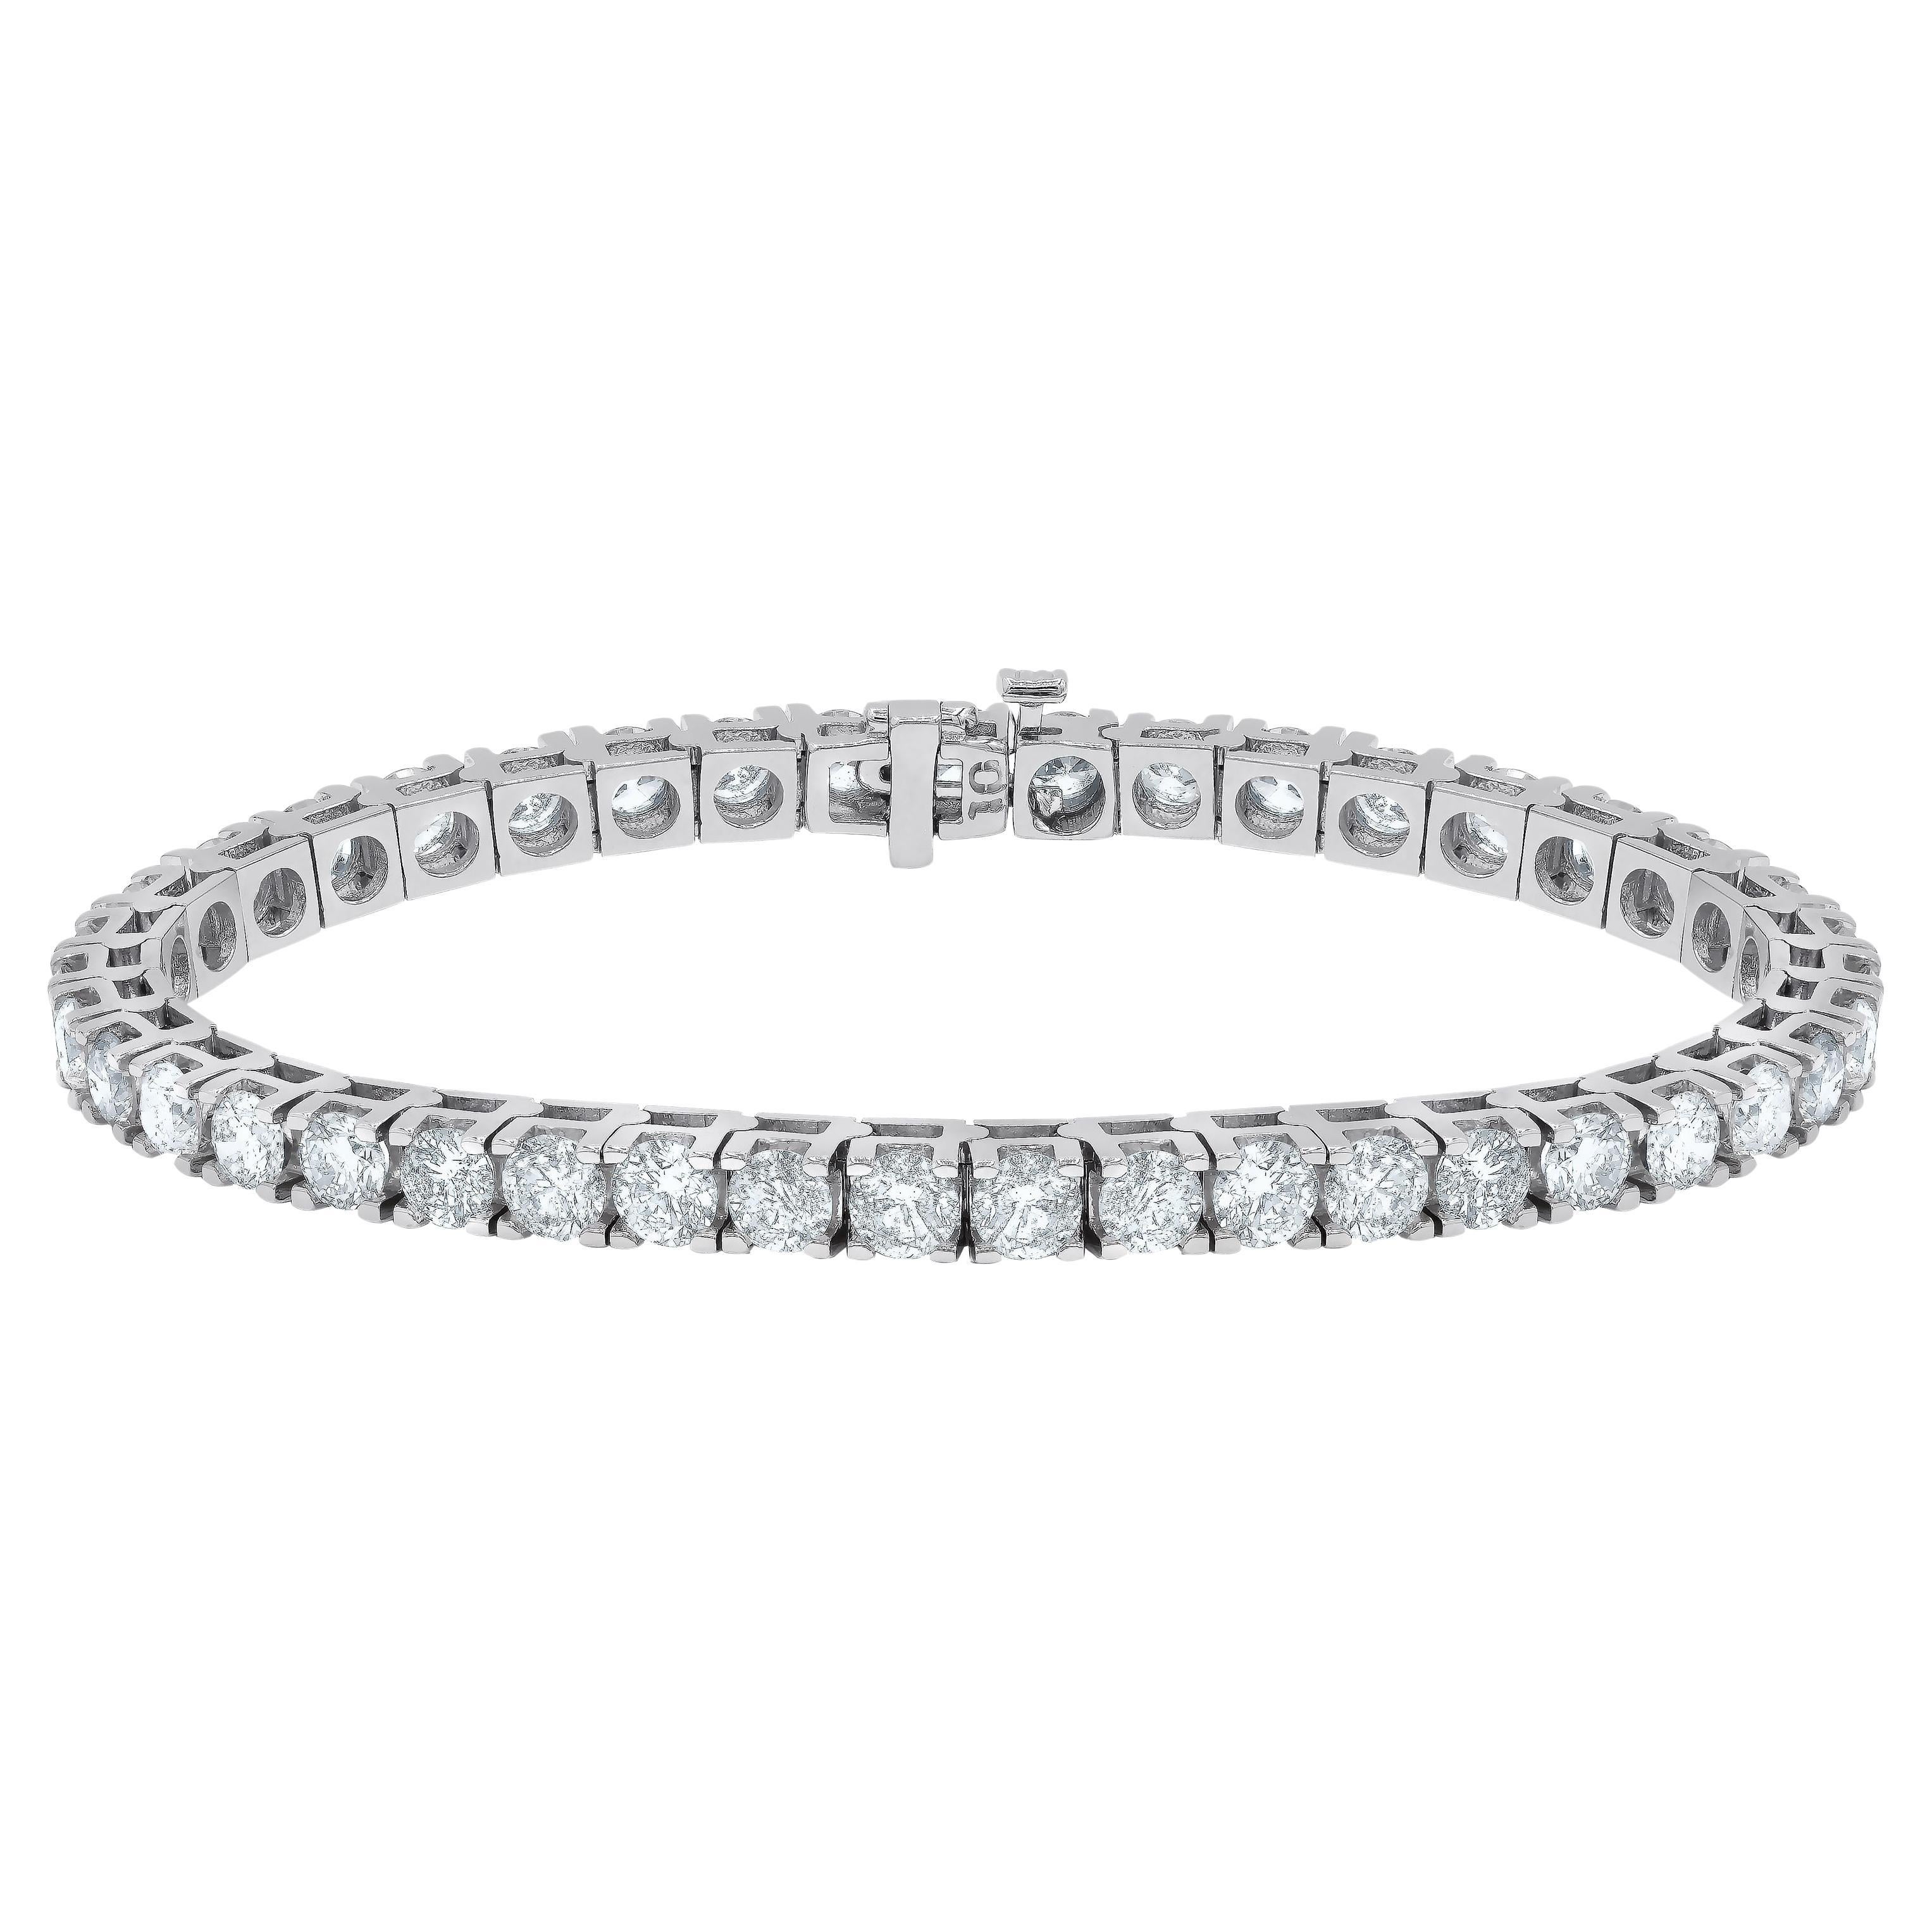 Diana M. Custom 14kt white gold tennis bracelet  4.59 cts round diamonds  For Sale